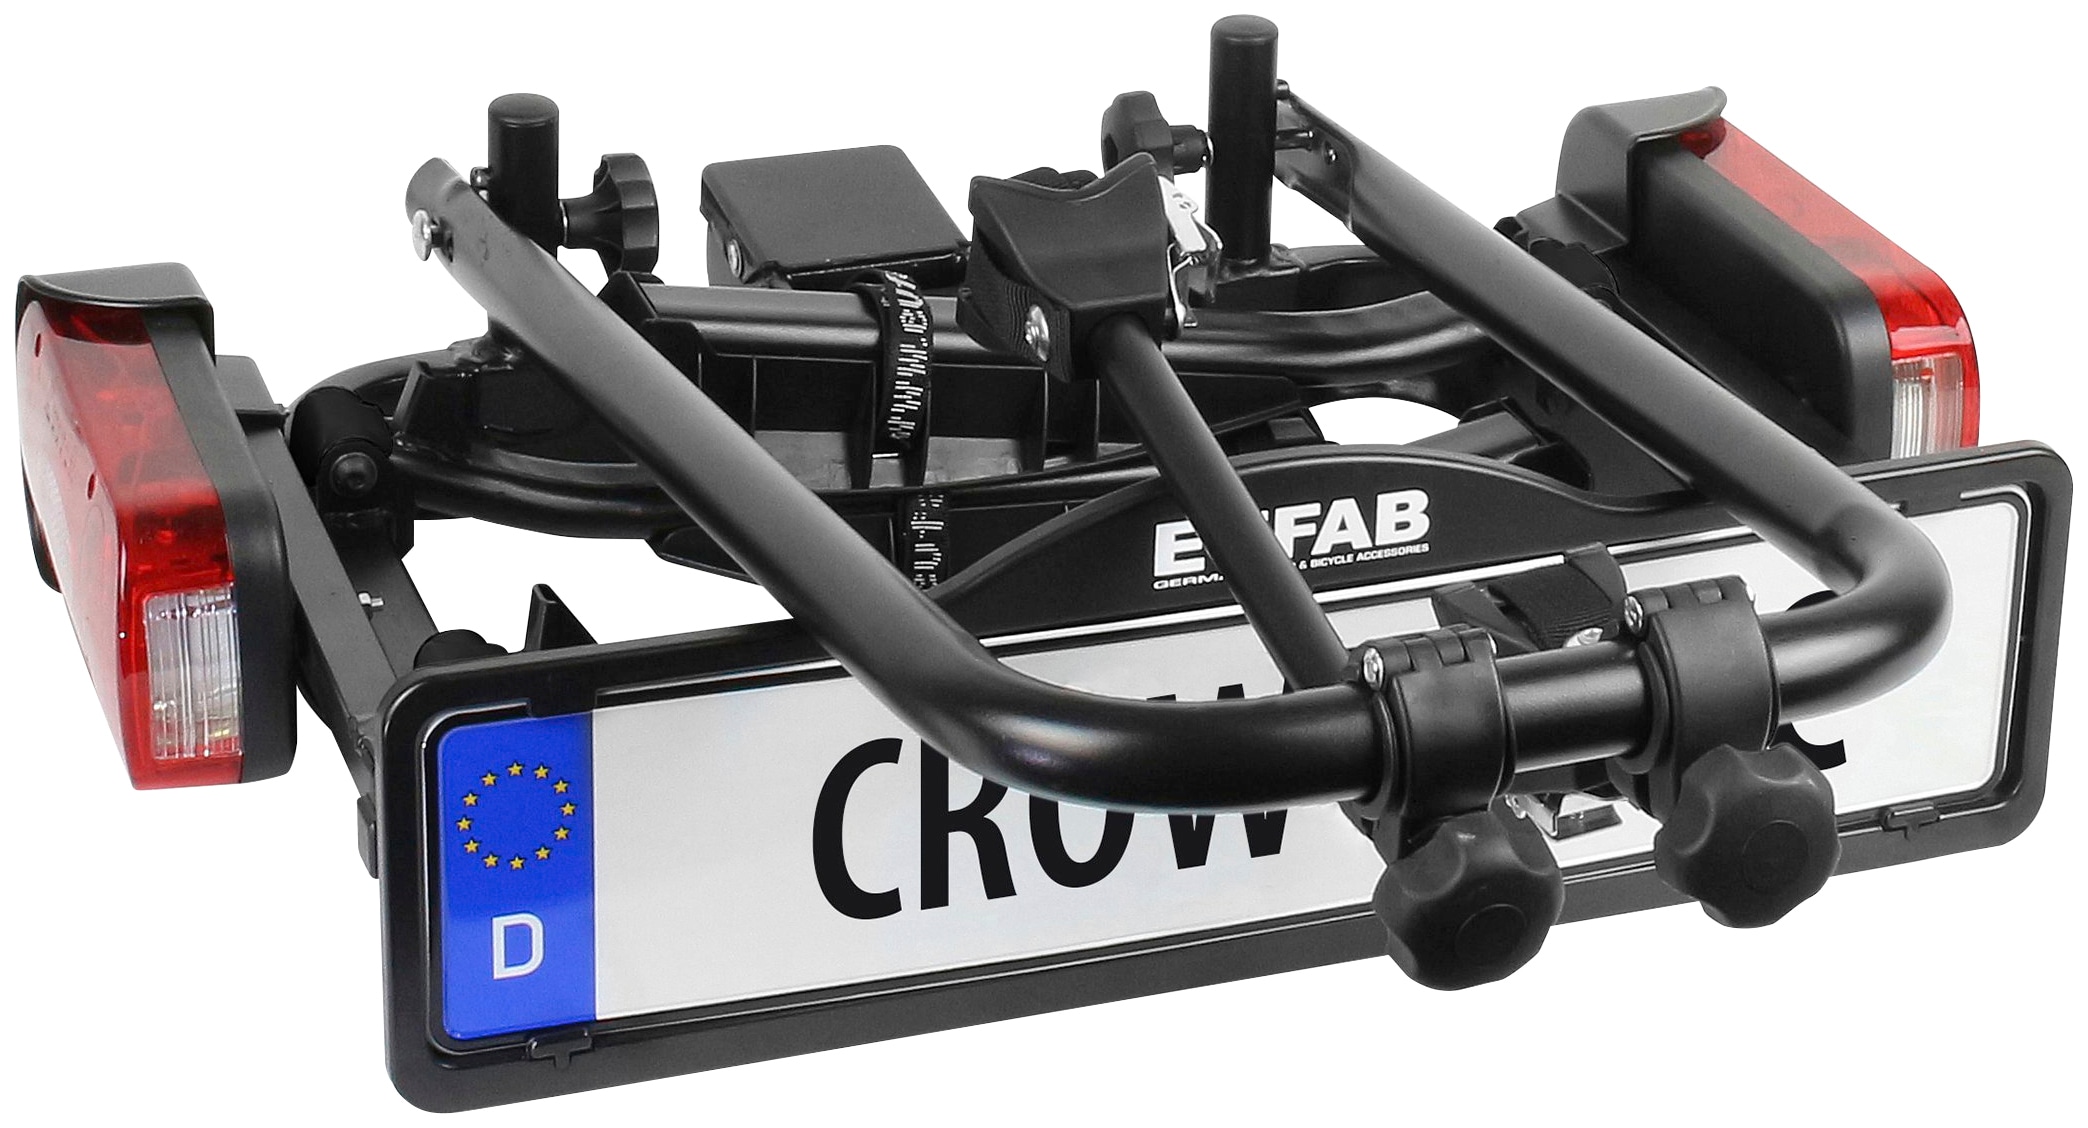 EUFAB Kupplungsfahrradträger »EUFAB 11569 CROW BASIC«, E-Bike geeignet